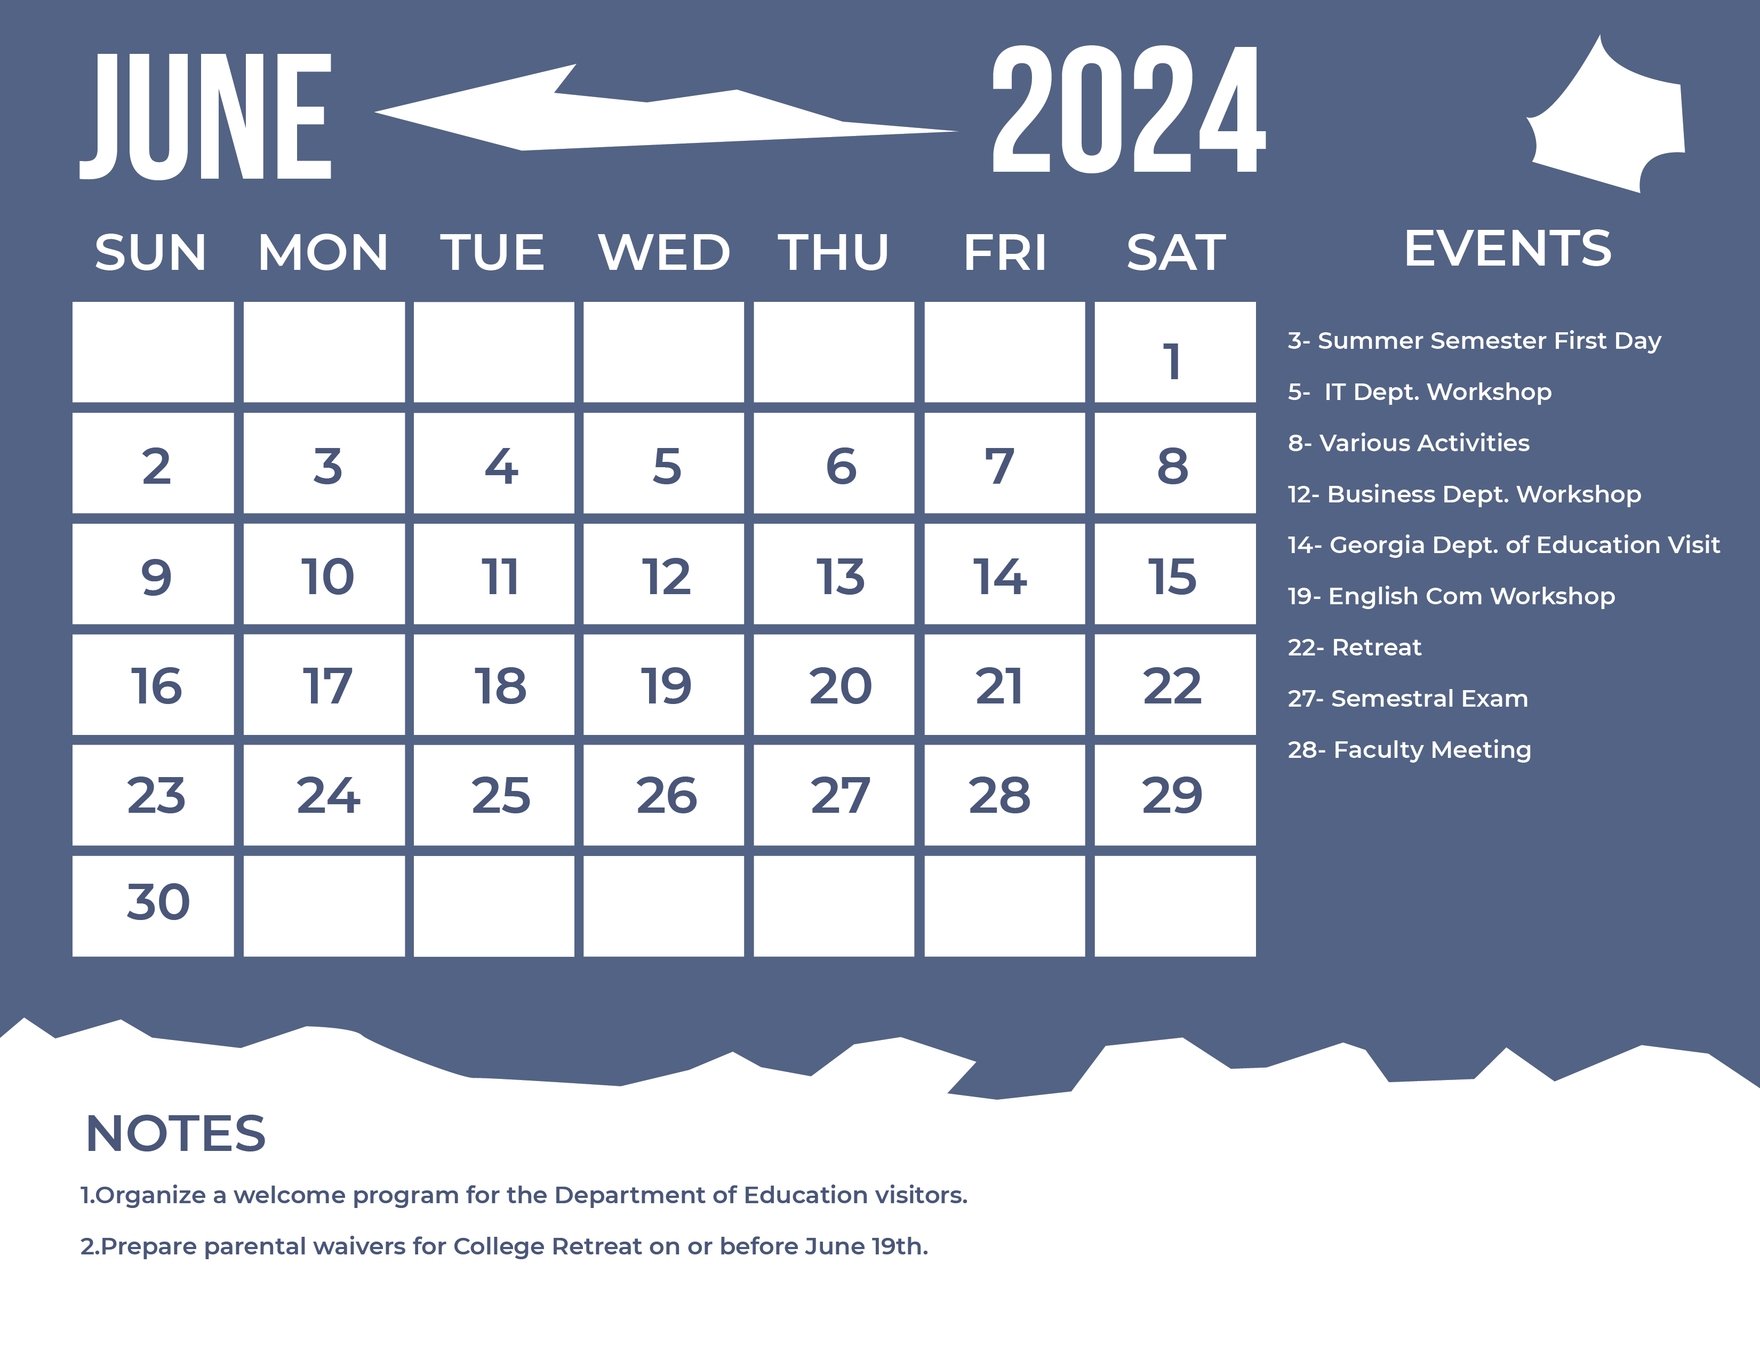 Free Pretty June 2024 Calendar in Word, Illustrator, EPS, SVG, JPG